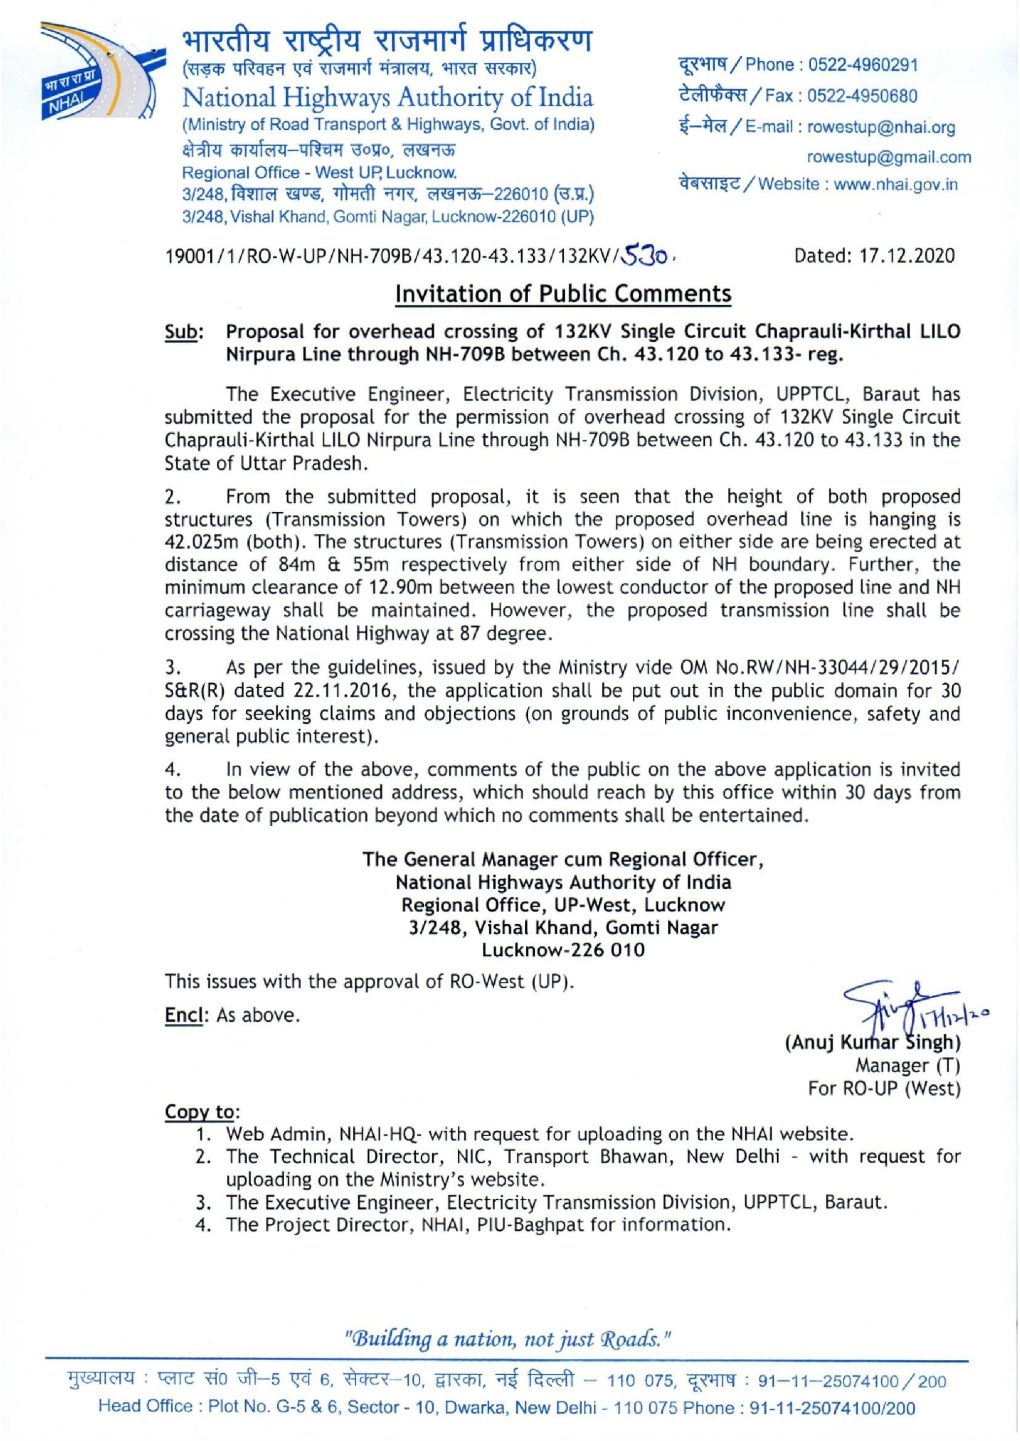 Proposal for Overhead Crossing of 132KV Single Circuit Chaprauli-Kirthal LILO Nirpura Line Through NH-709B Between Ch